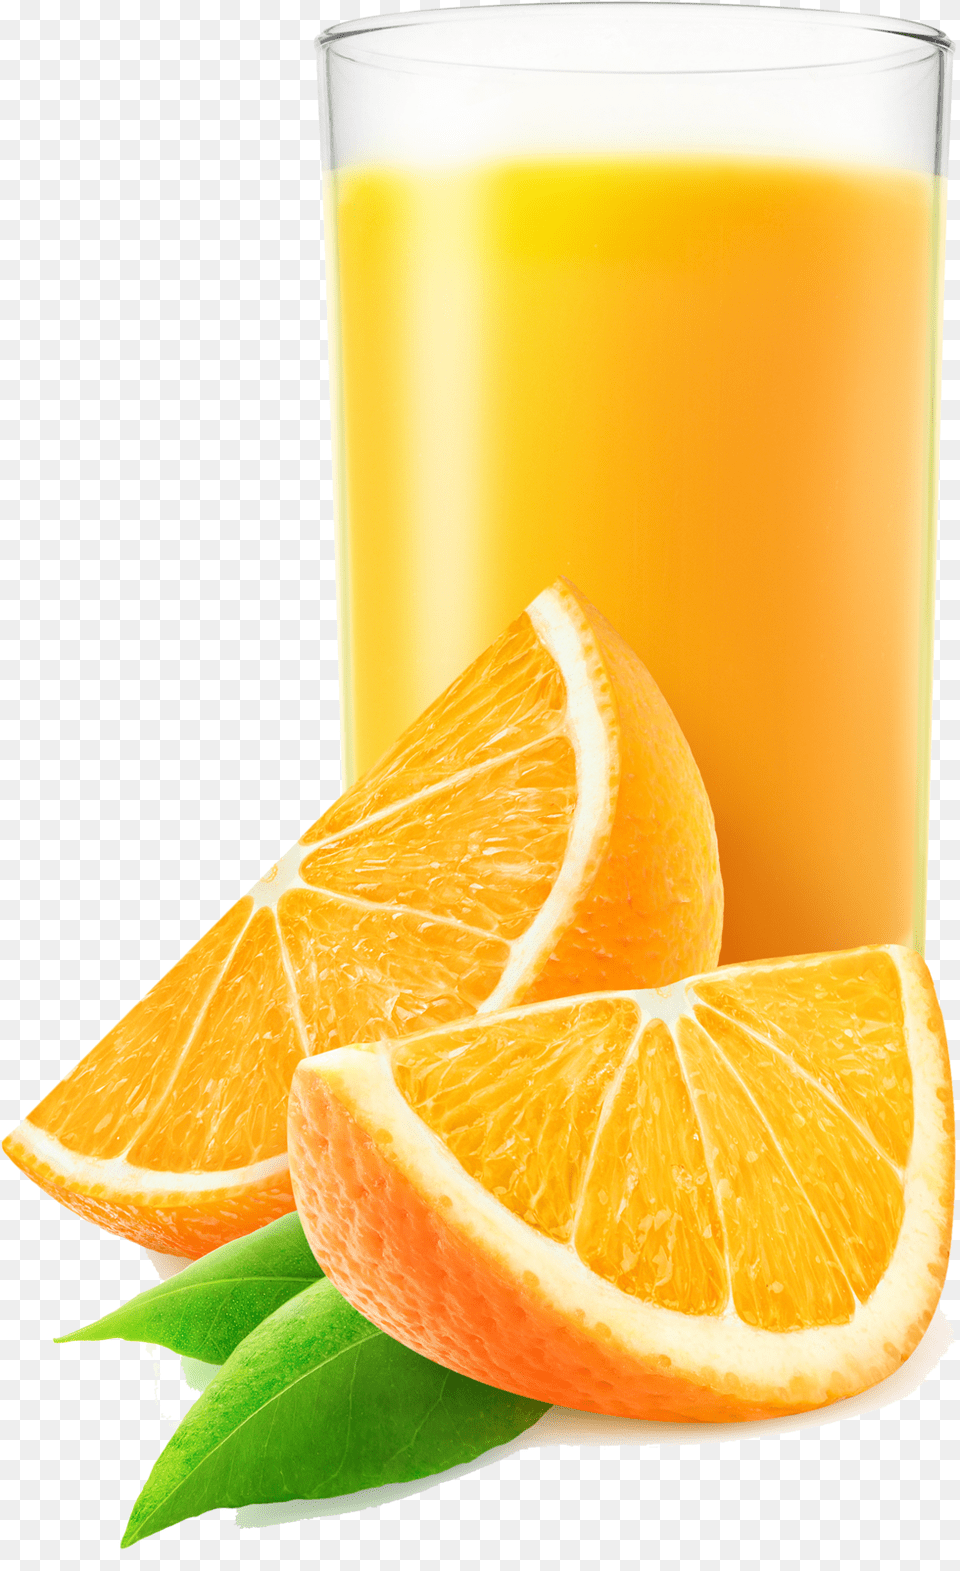 Orange Juice Tomato Juice Soft Drink Apple Juice Orange Juice Apple Juice, Beverage, Orange Juice, Citrus Fruit, Food Free Png Download